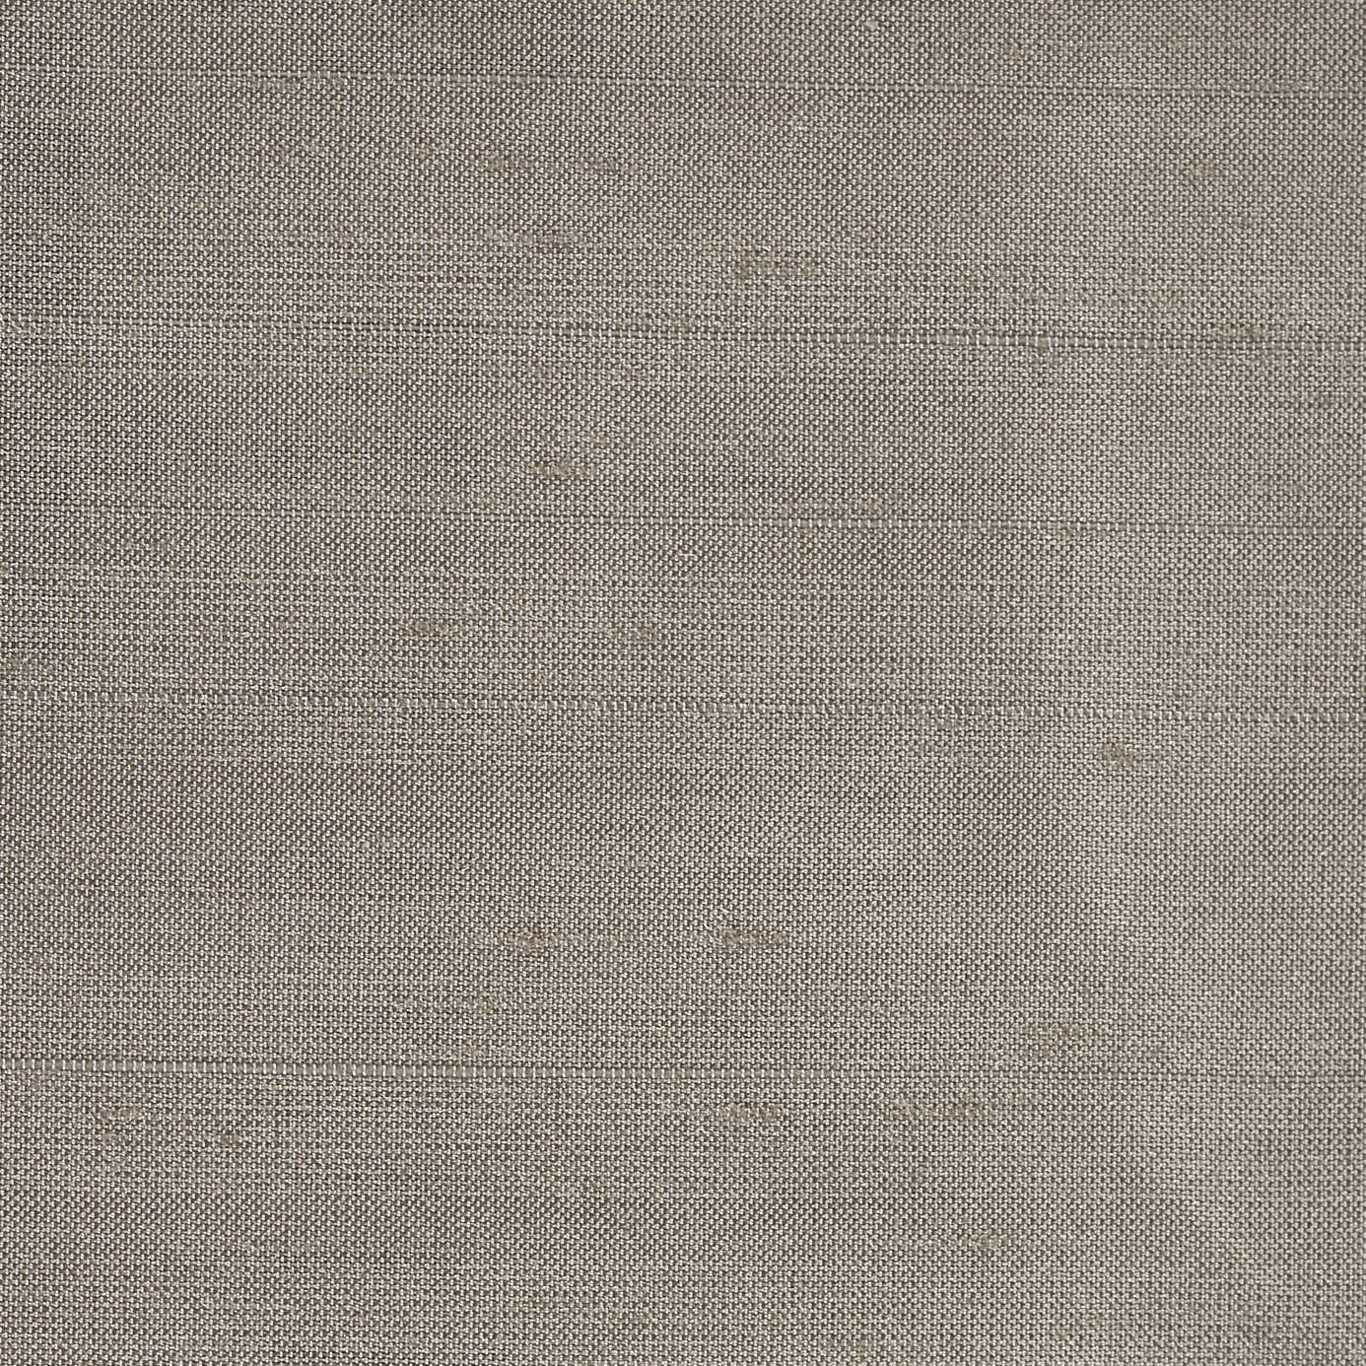 Deflect Fabric by Harlequin - HPOL440671 - Haze